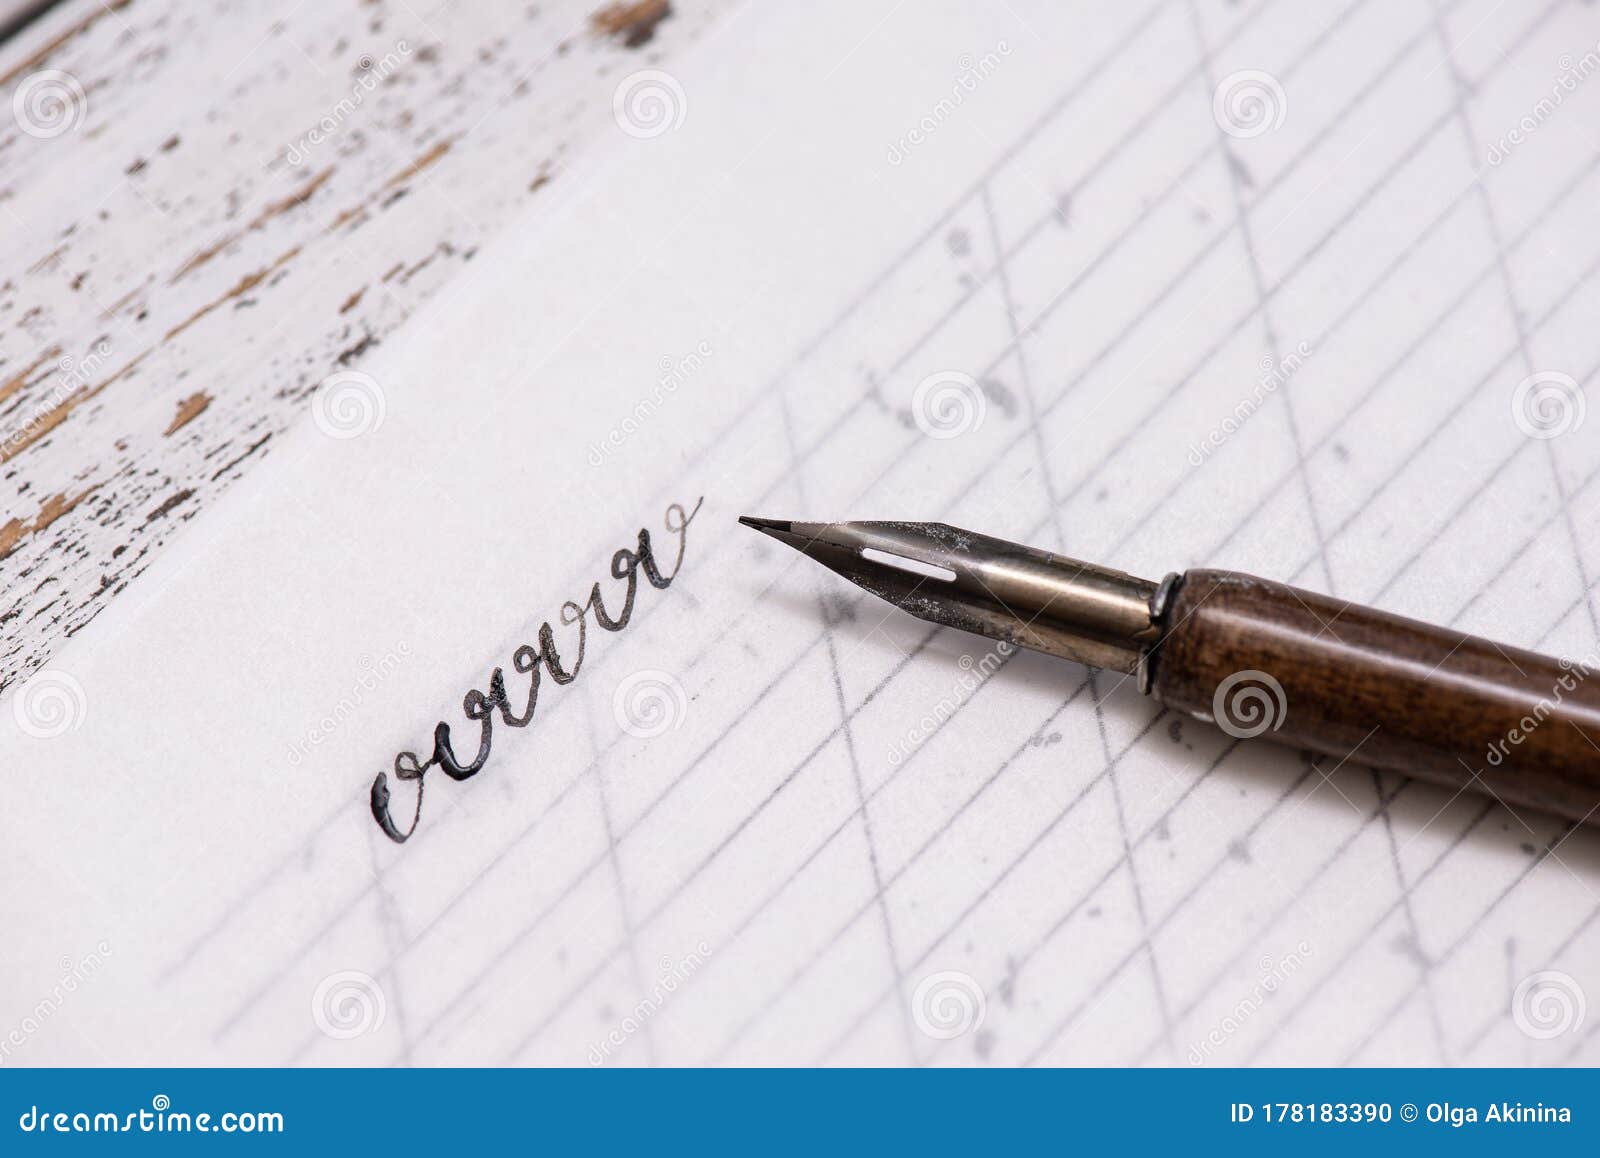 Free Hand Lettering Practice Sheets - Printable Brush Pen Lettering Guides  - Maker Lex